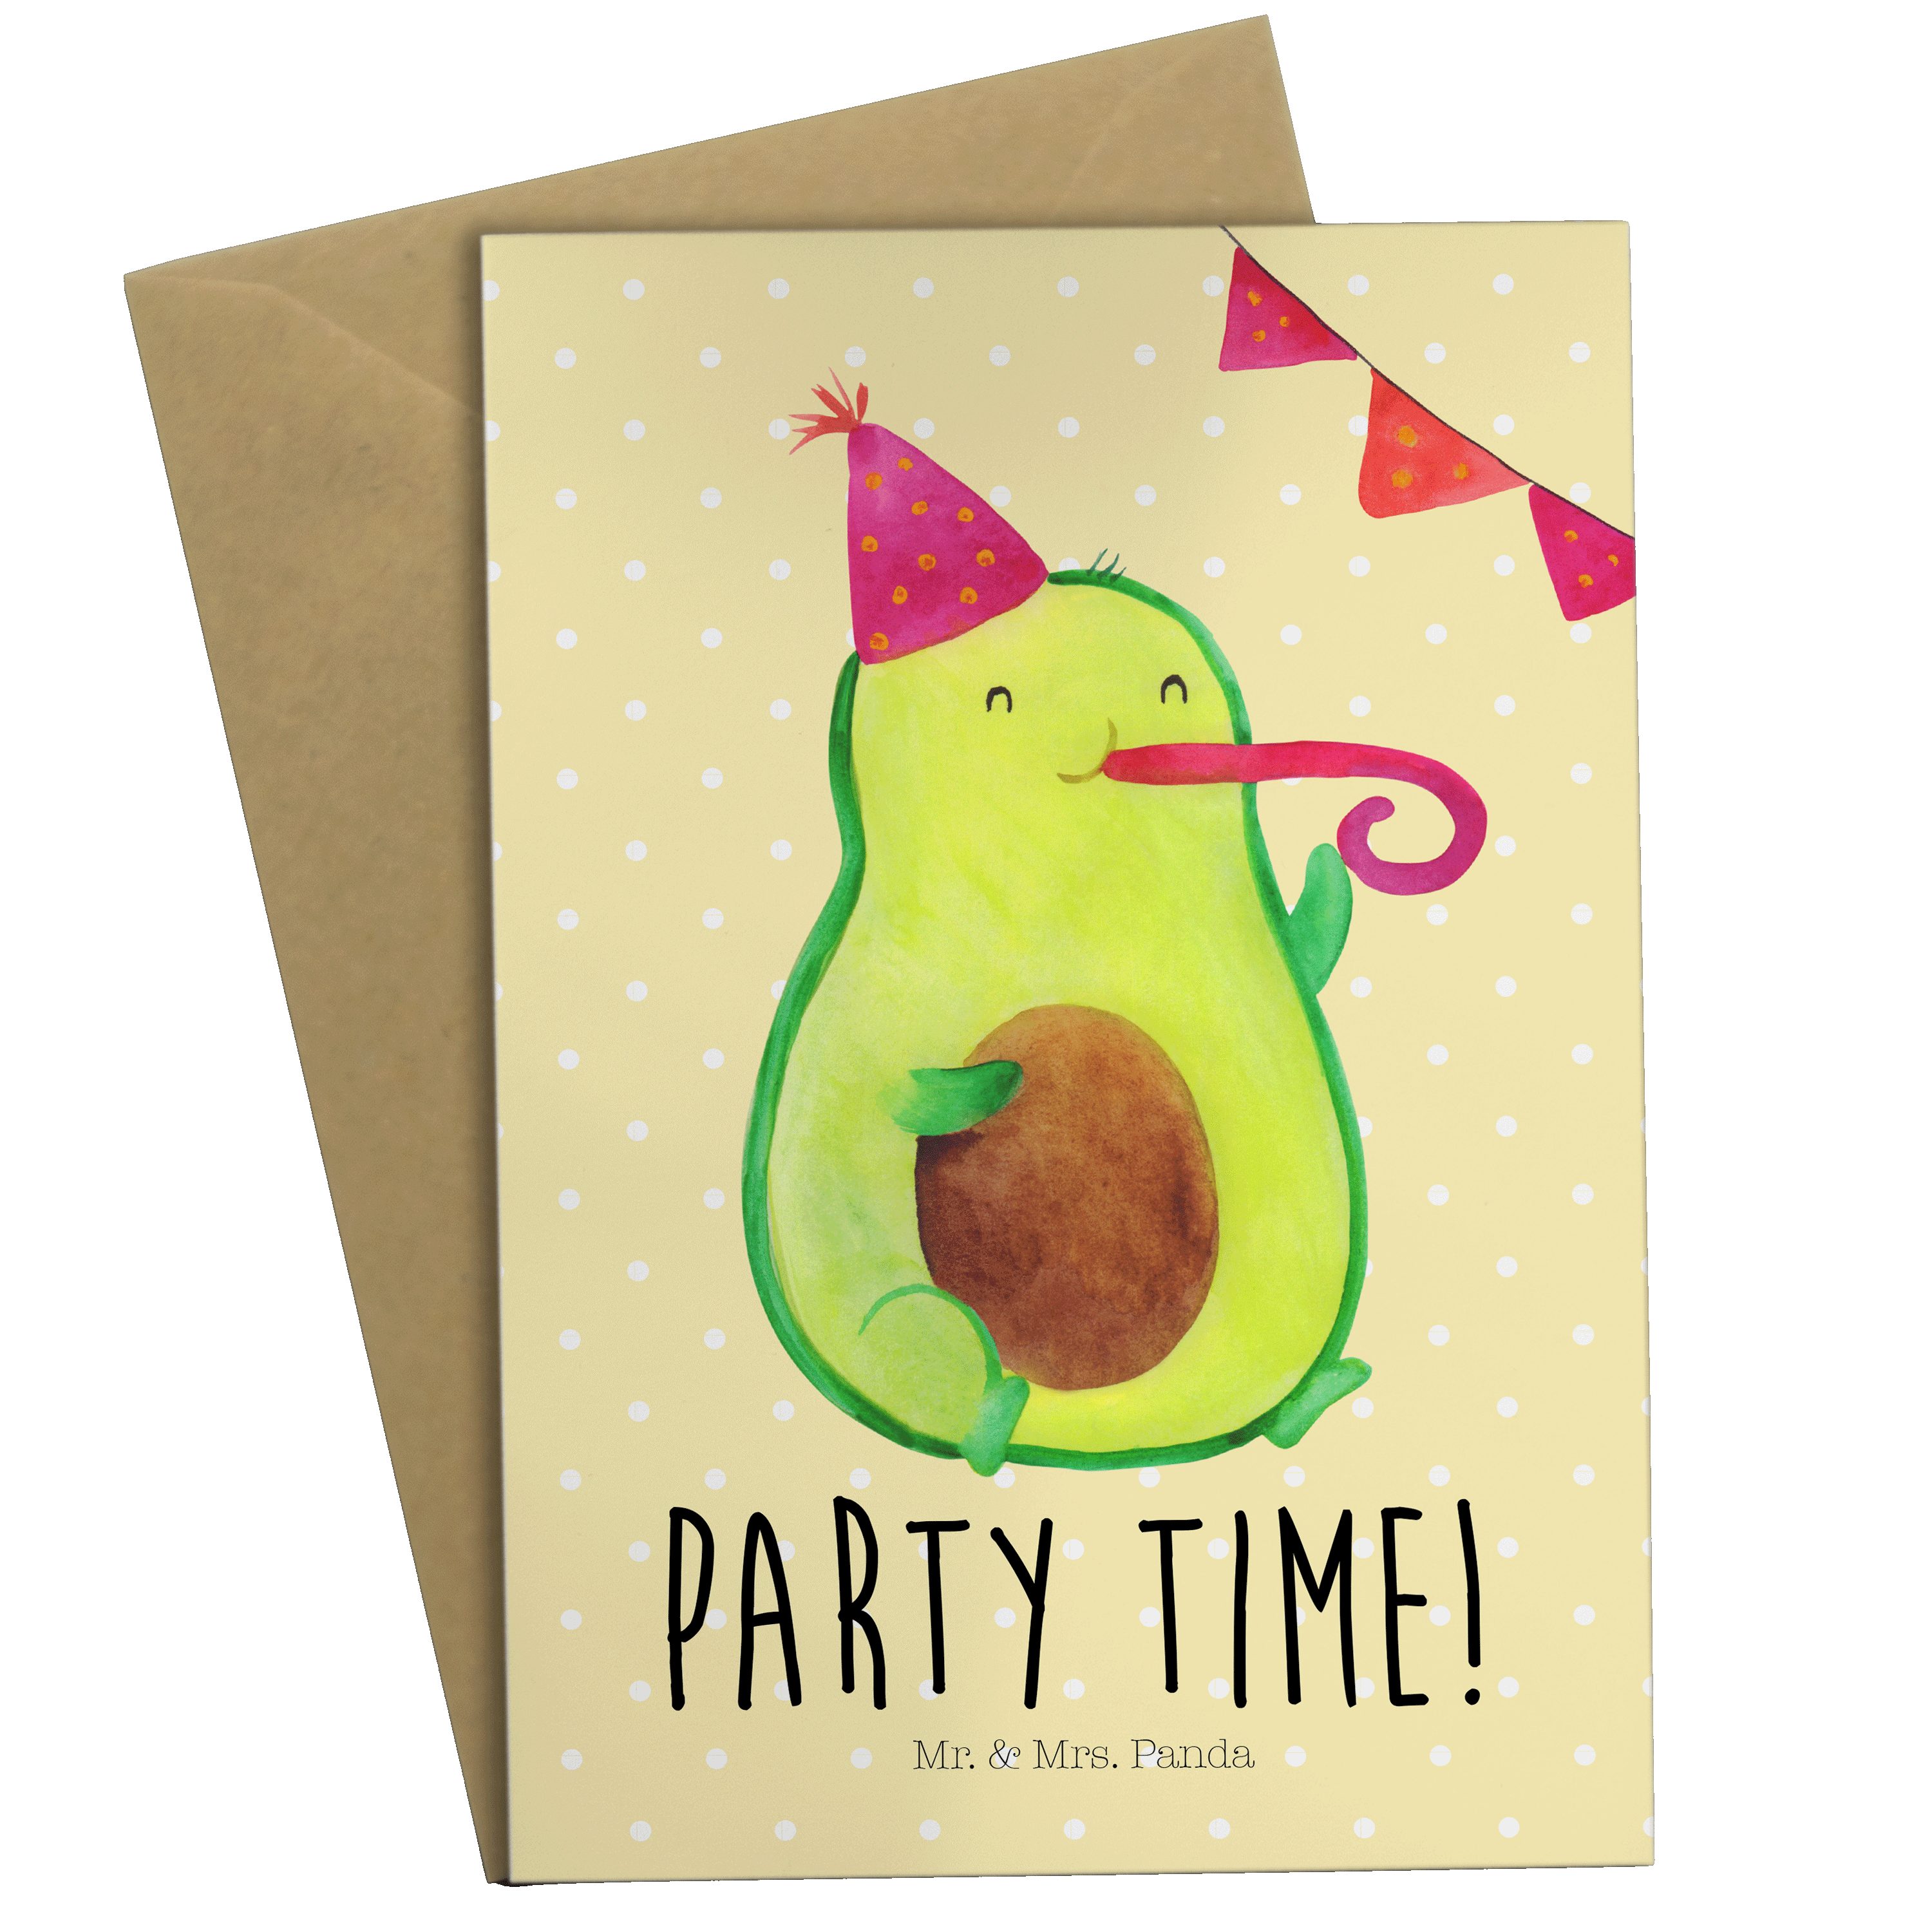 Mr. & Pastell Gelb - Mrs. Panda Glückw Geschenk, Party - Vegan, Time Abifeier, Grußkarte Avocado